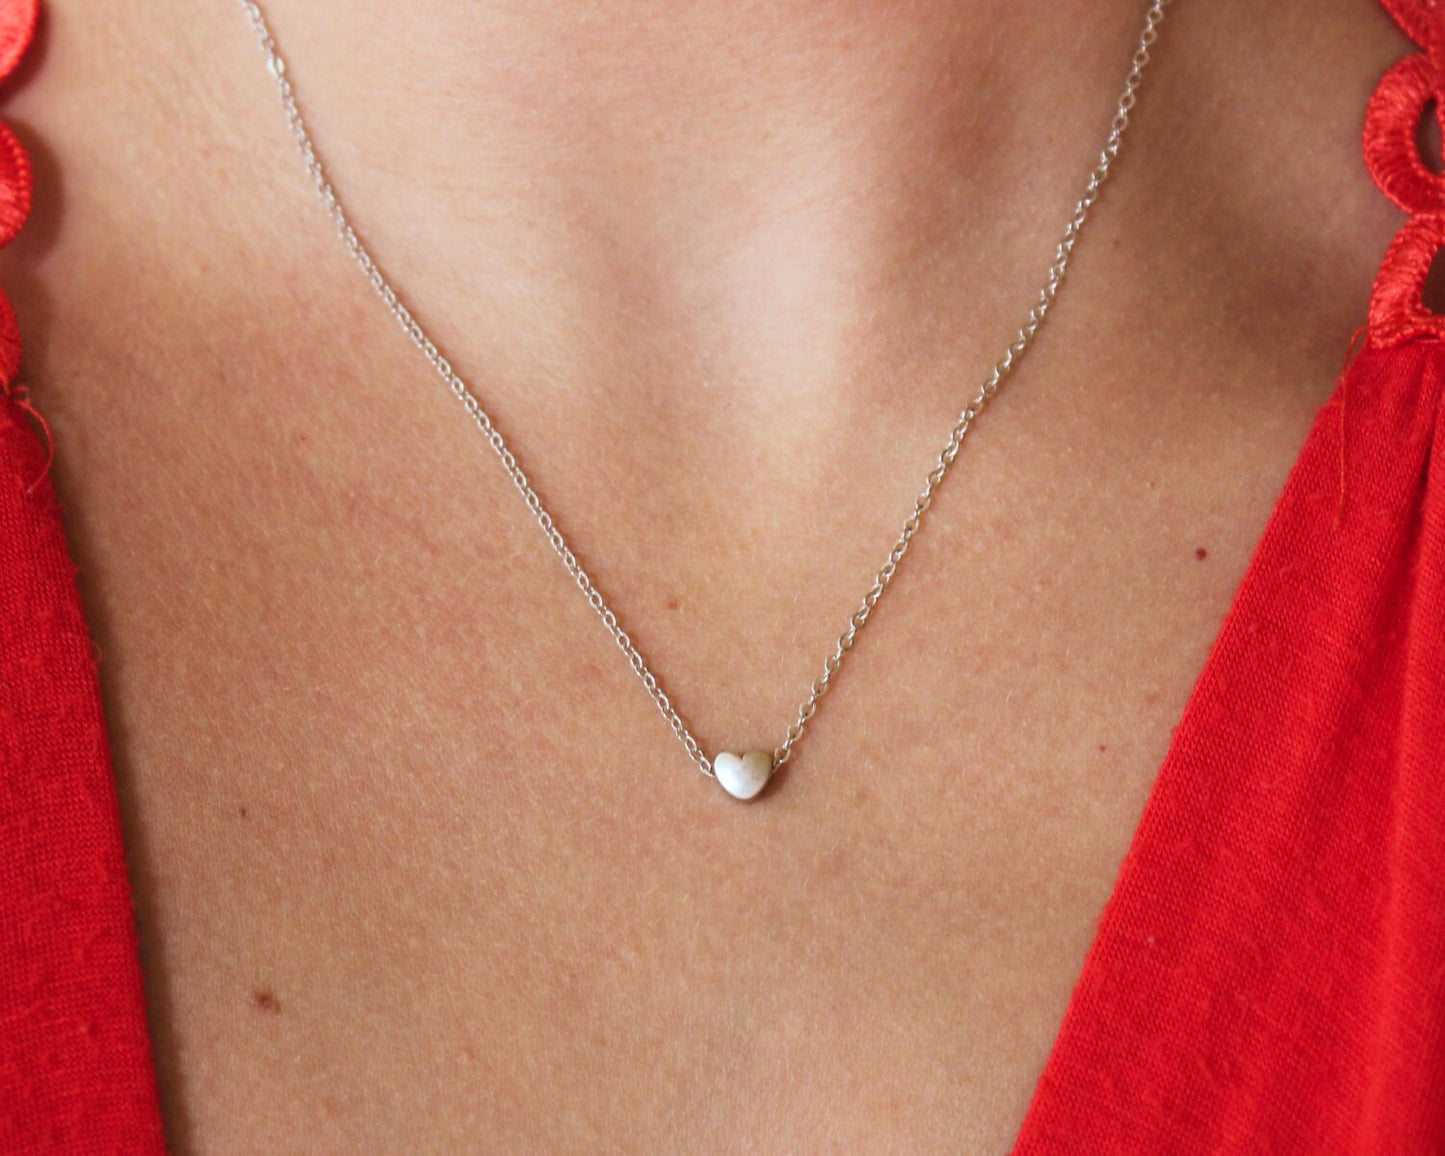 Silver or Gold Mini Heart Necklace - BridesMaid Gift - Gold or Silver Heart Necklace